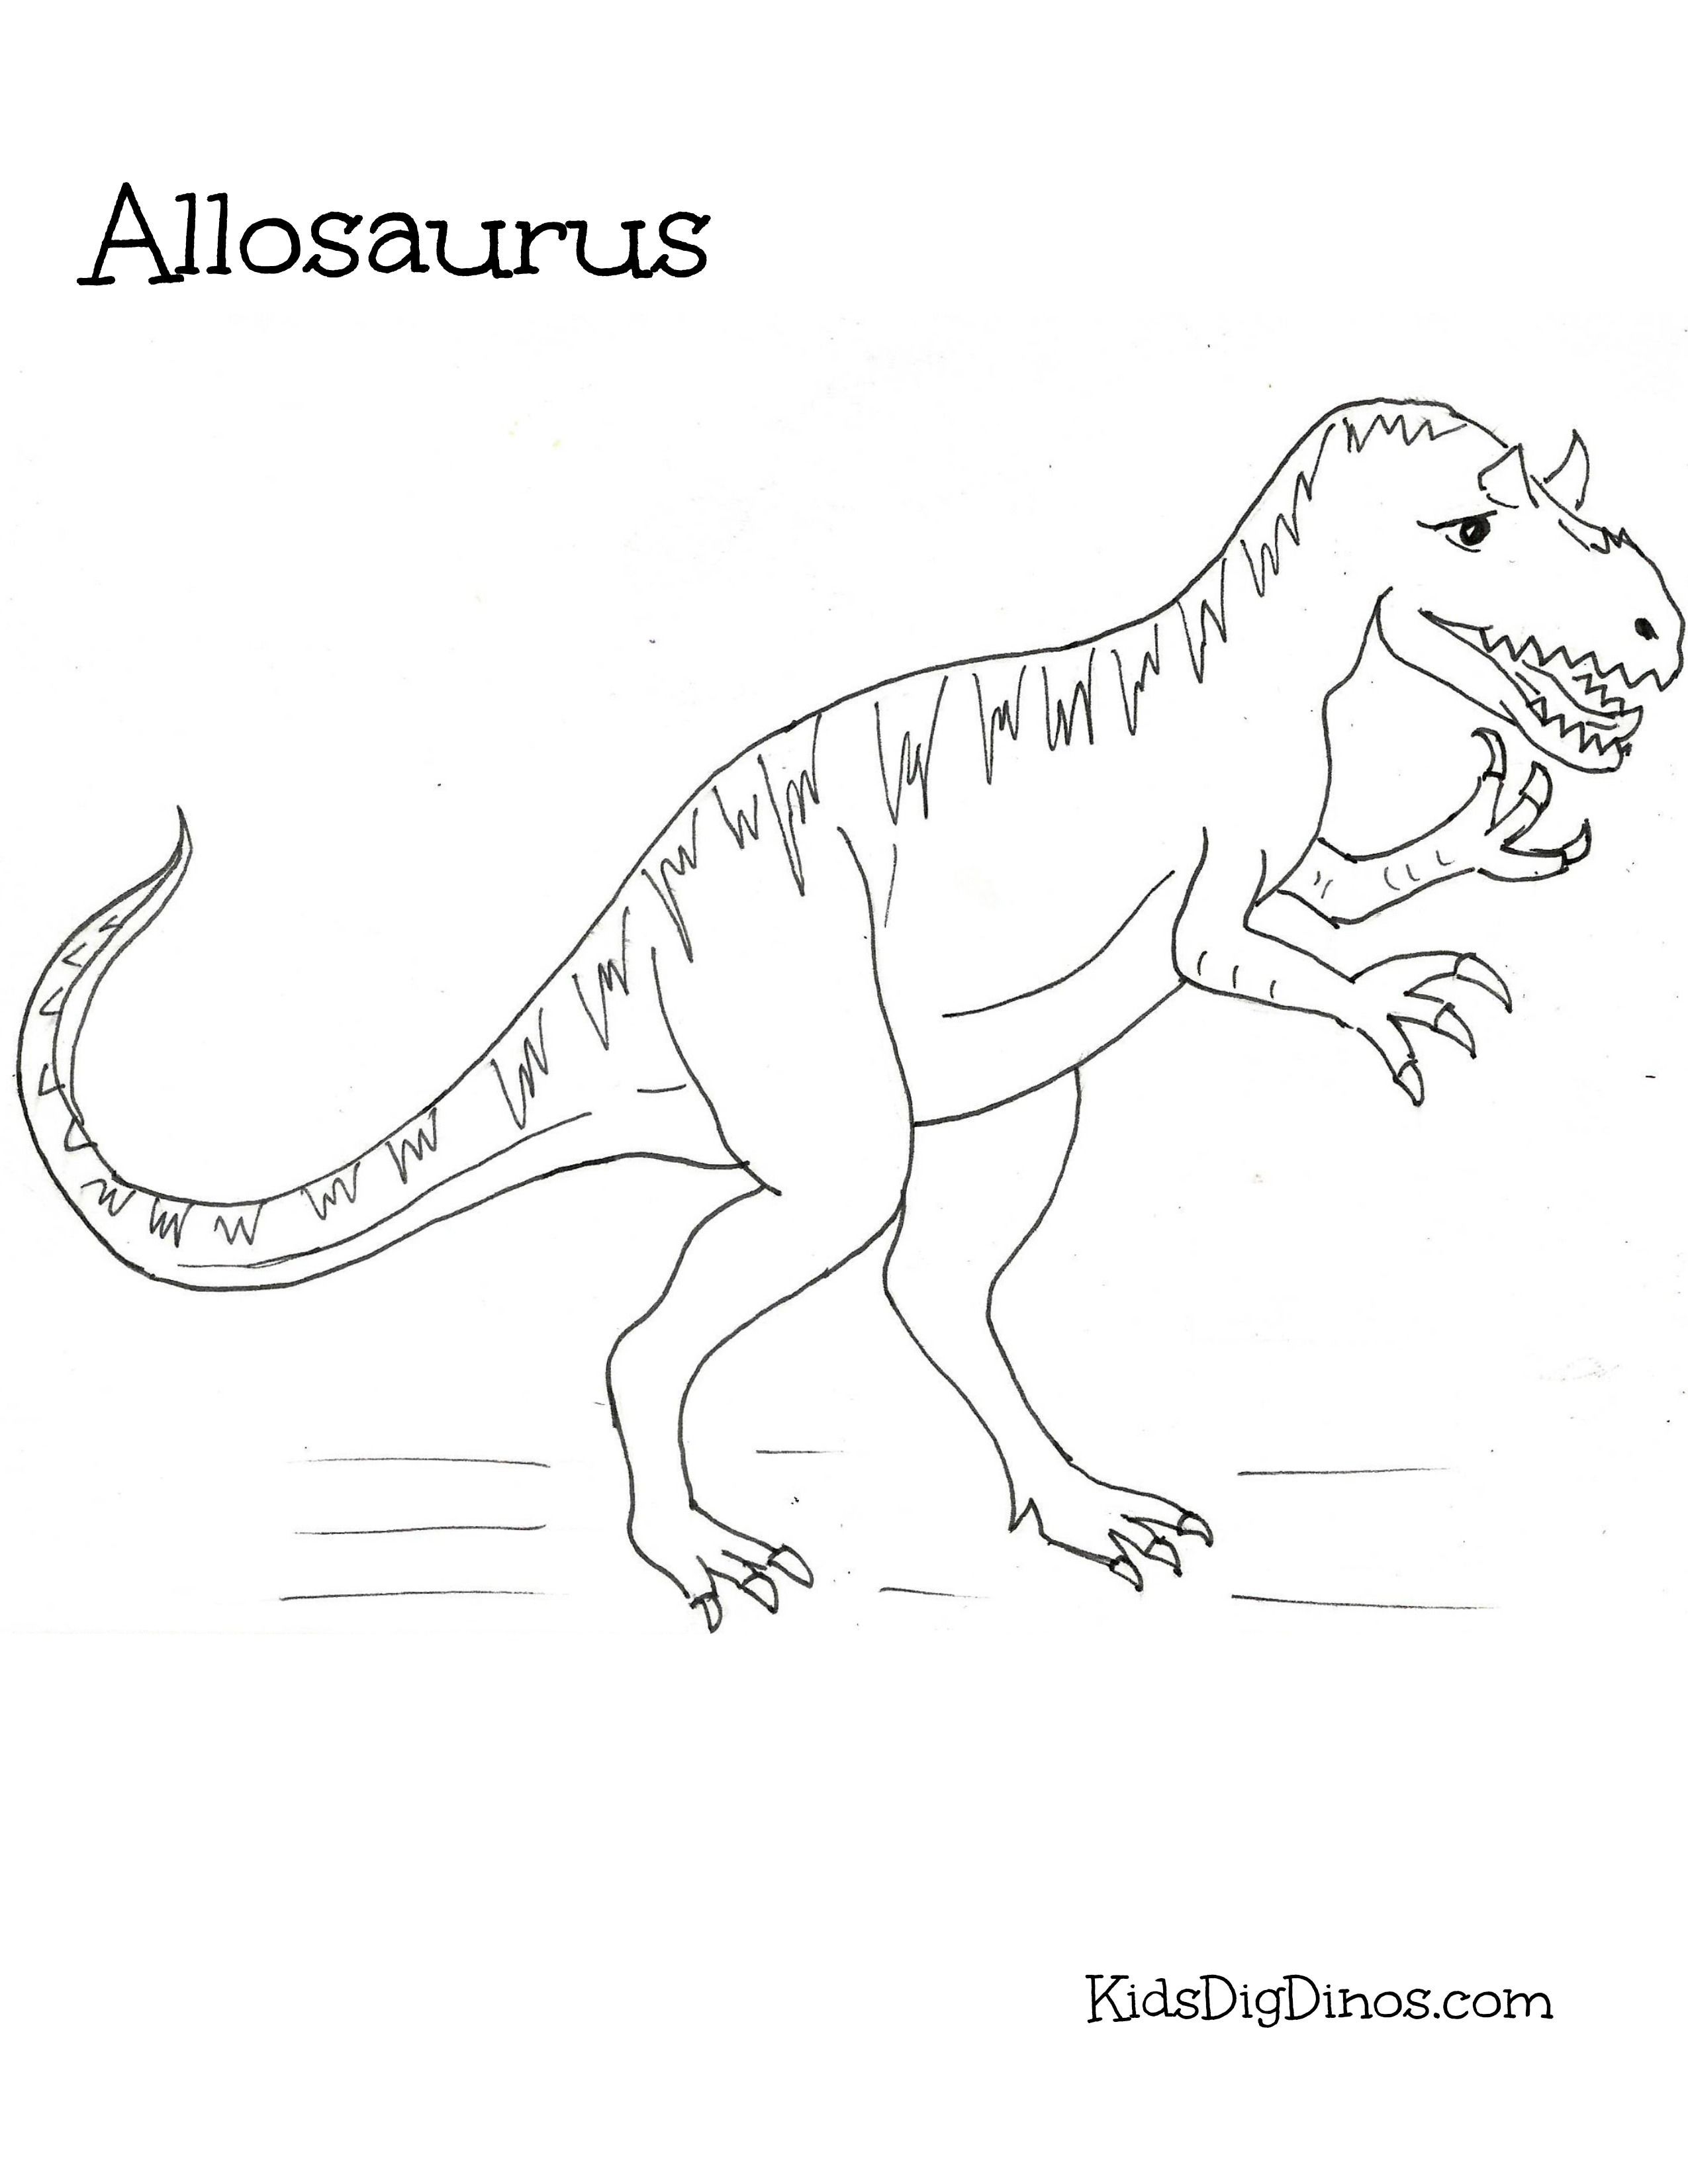 Allosaurus Coloring Page at GetDrawings Free download